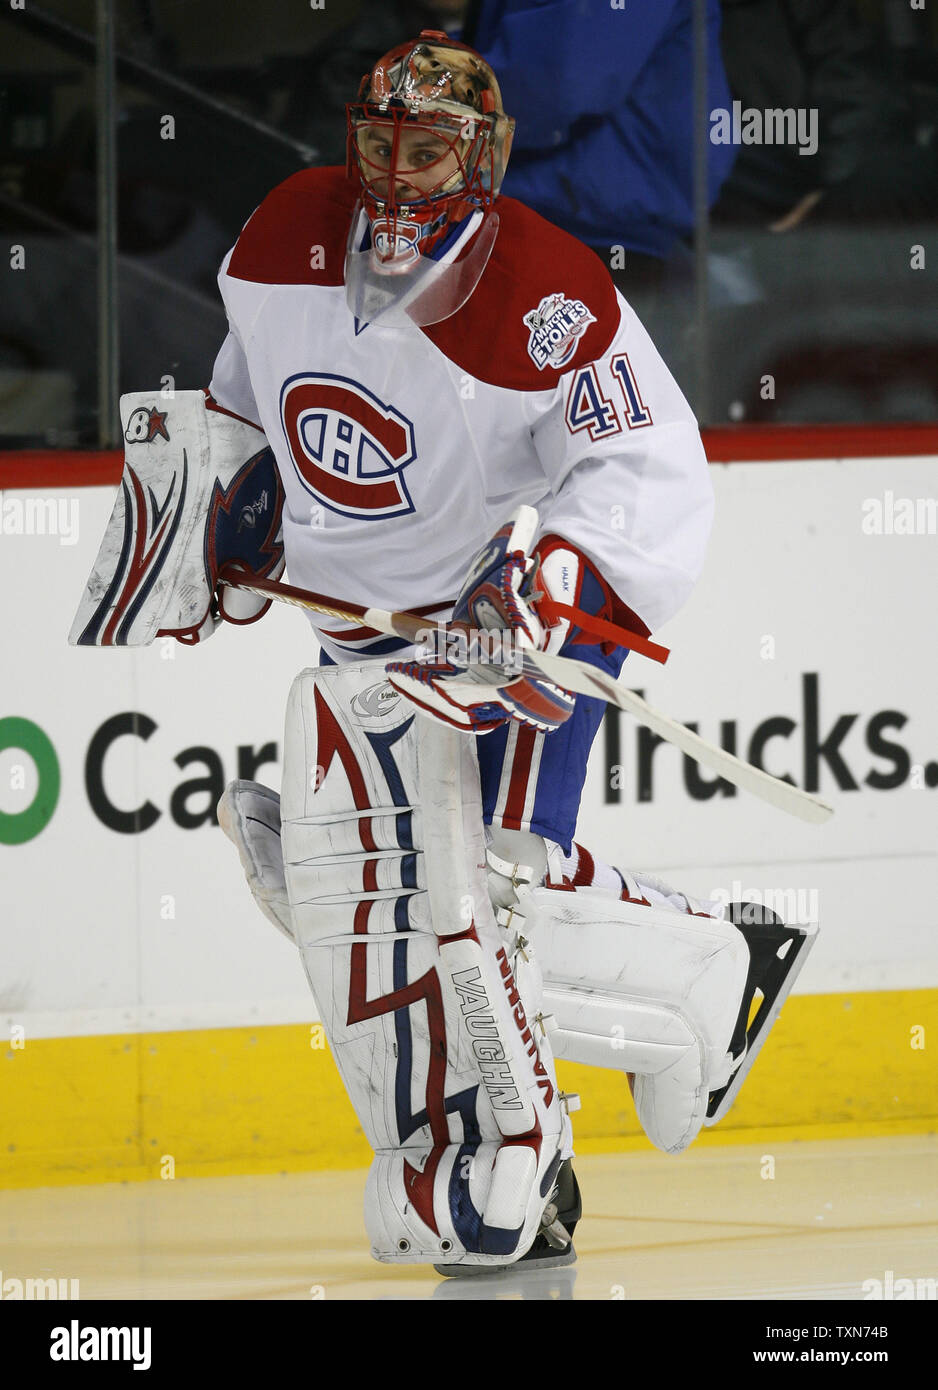 Jaroslav Halak's new Islanders mask : r/hockey